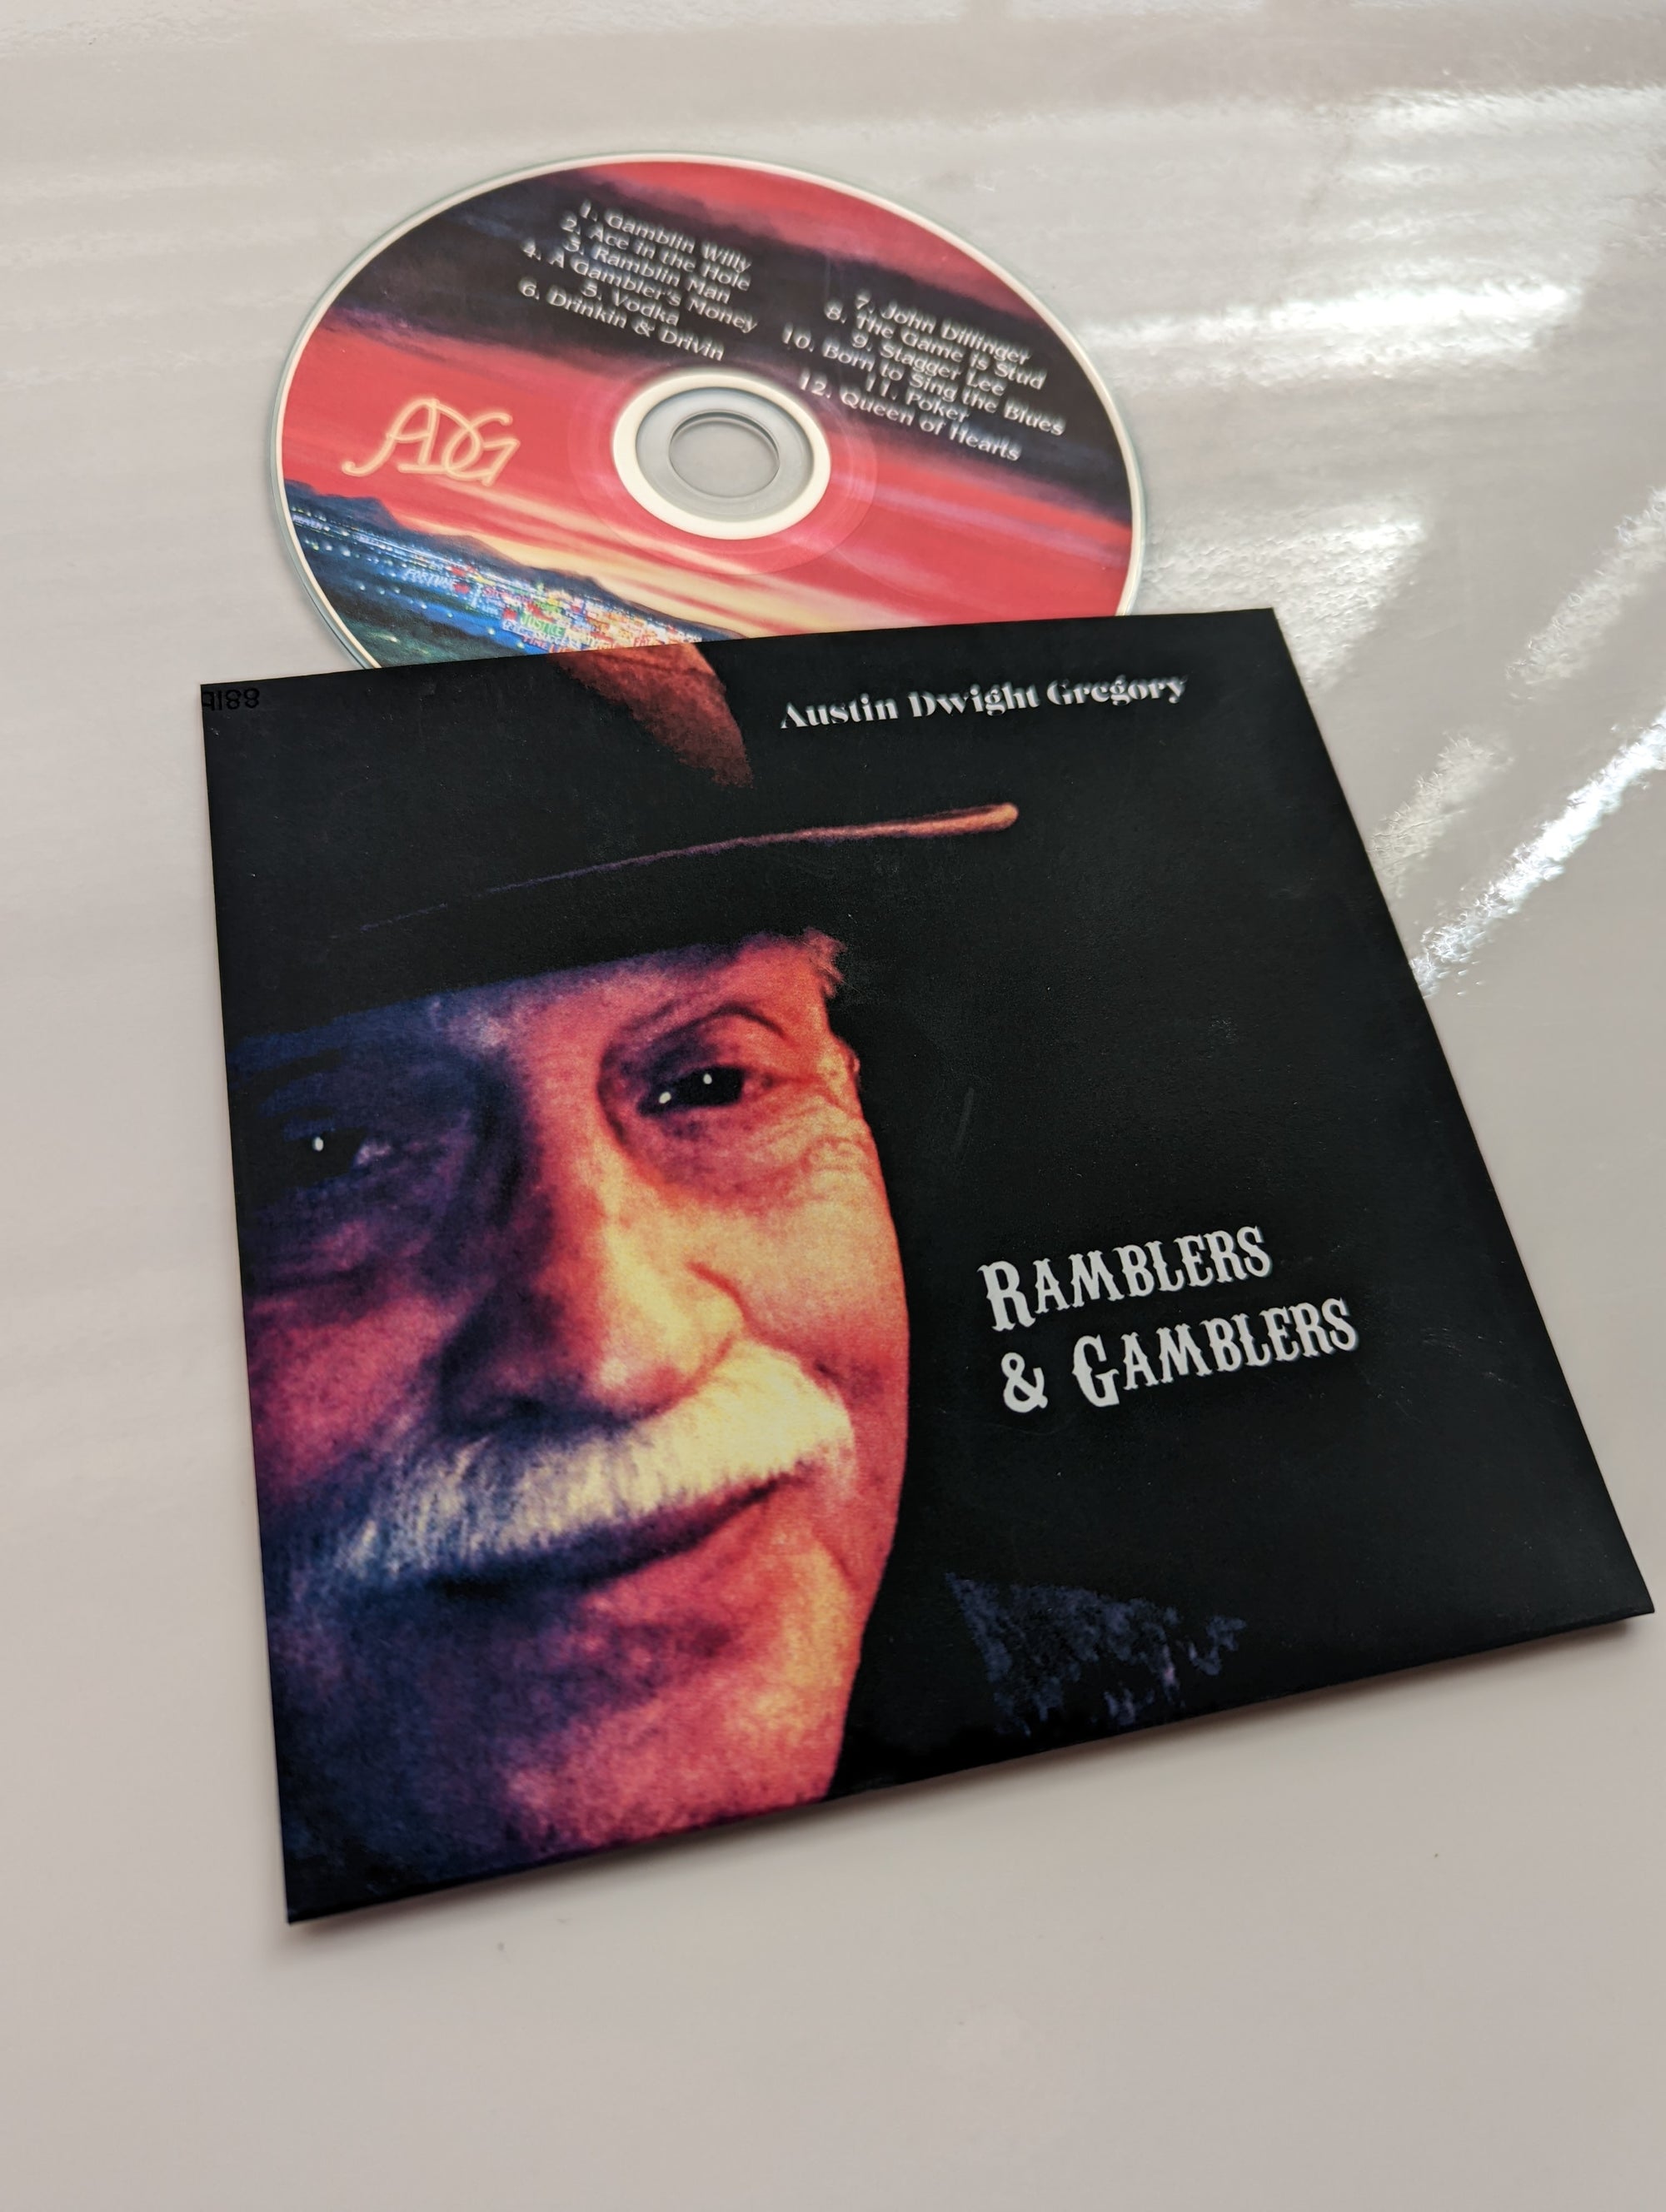 Austin Dwight Gregory - Ramblers & Gamblers - CD in Square Jacket